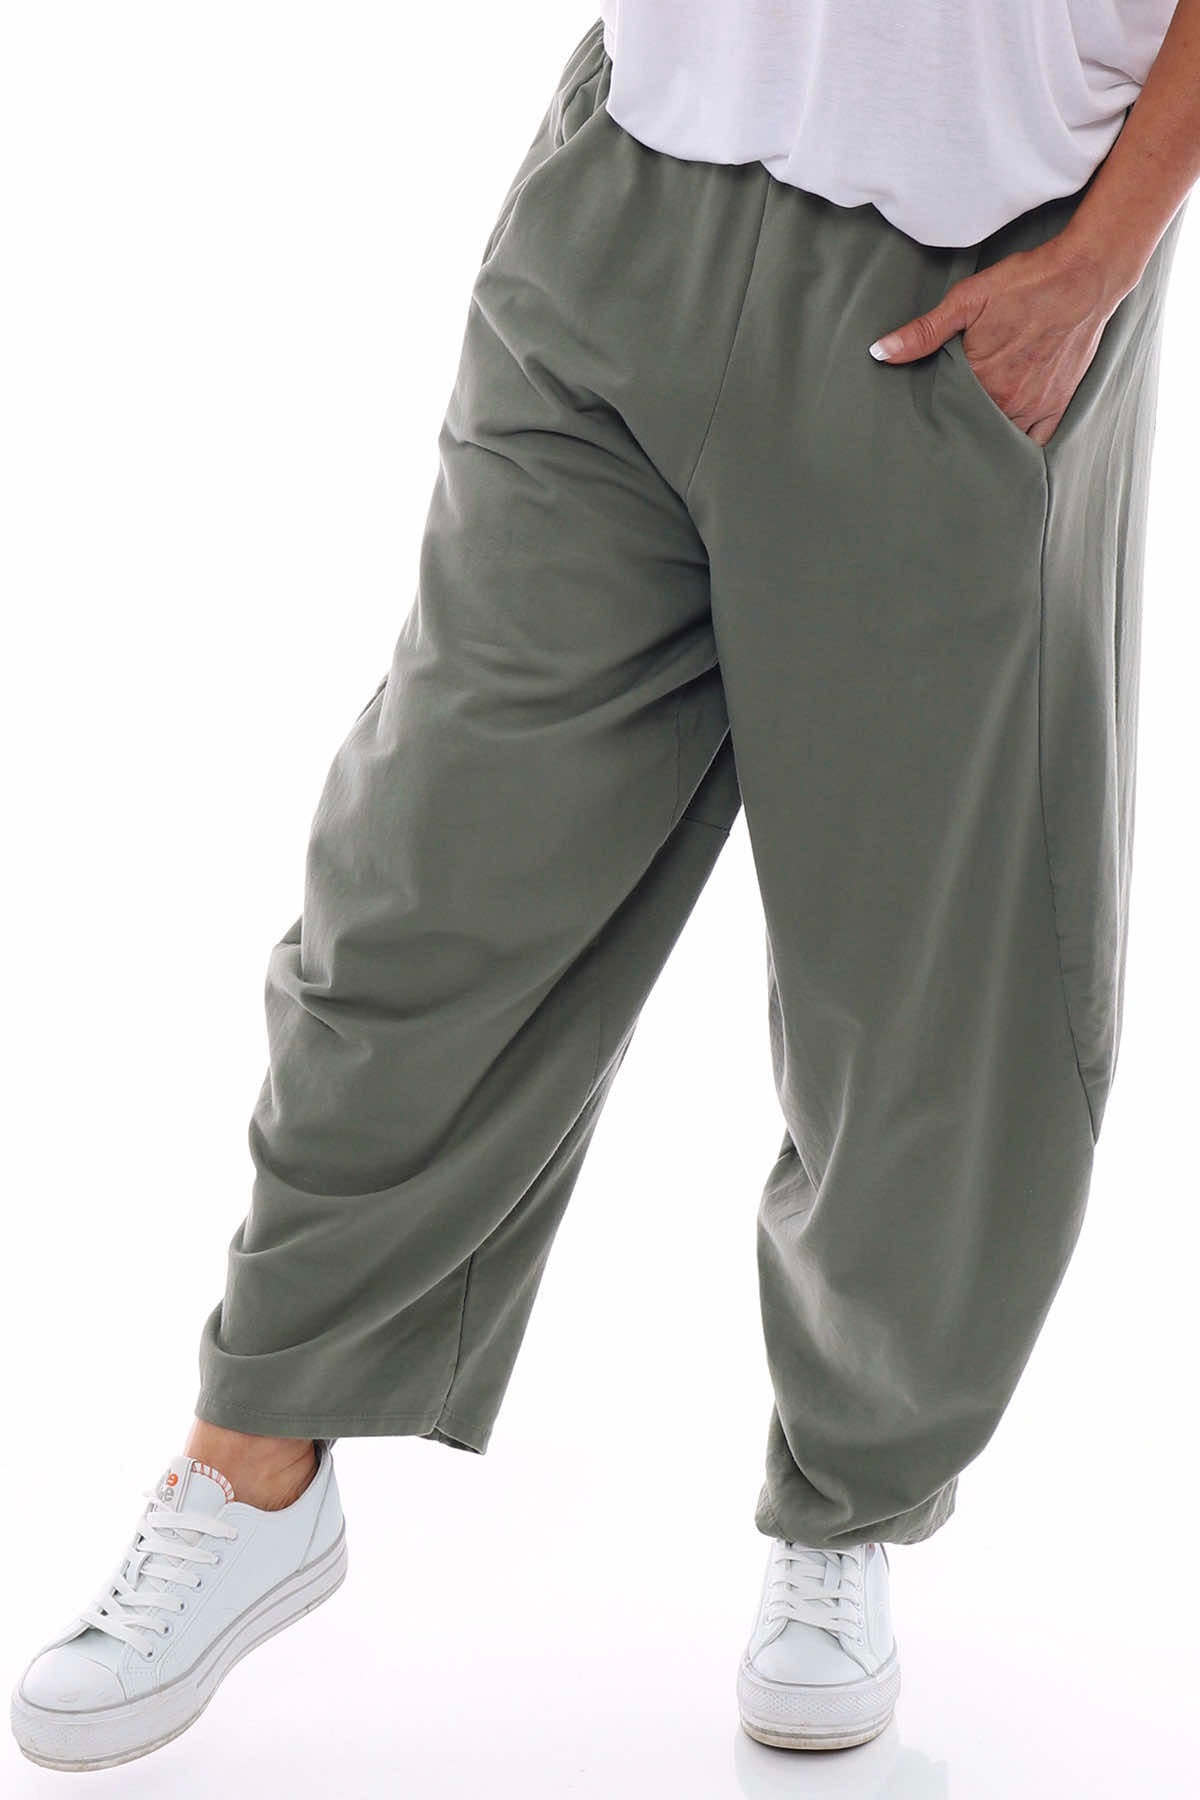 Kensley Cotton Pants Light Khaki